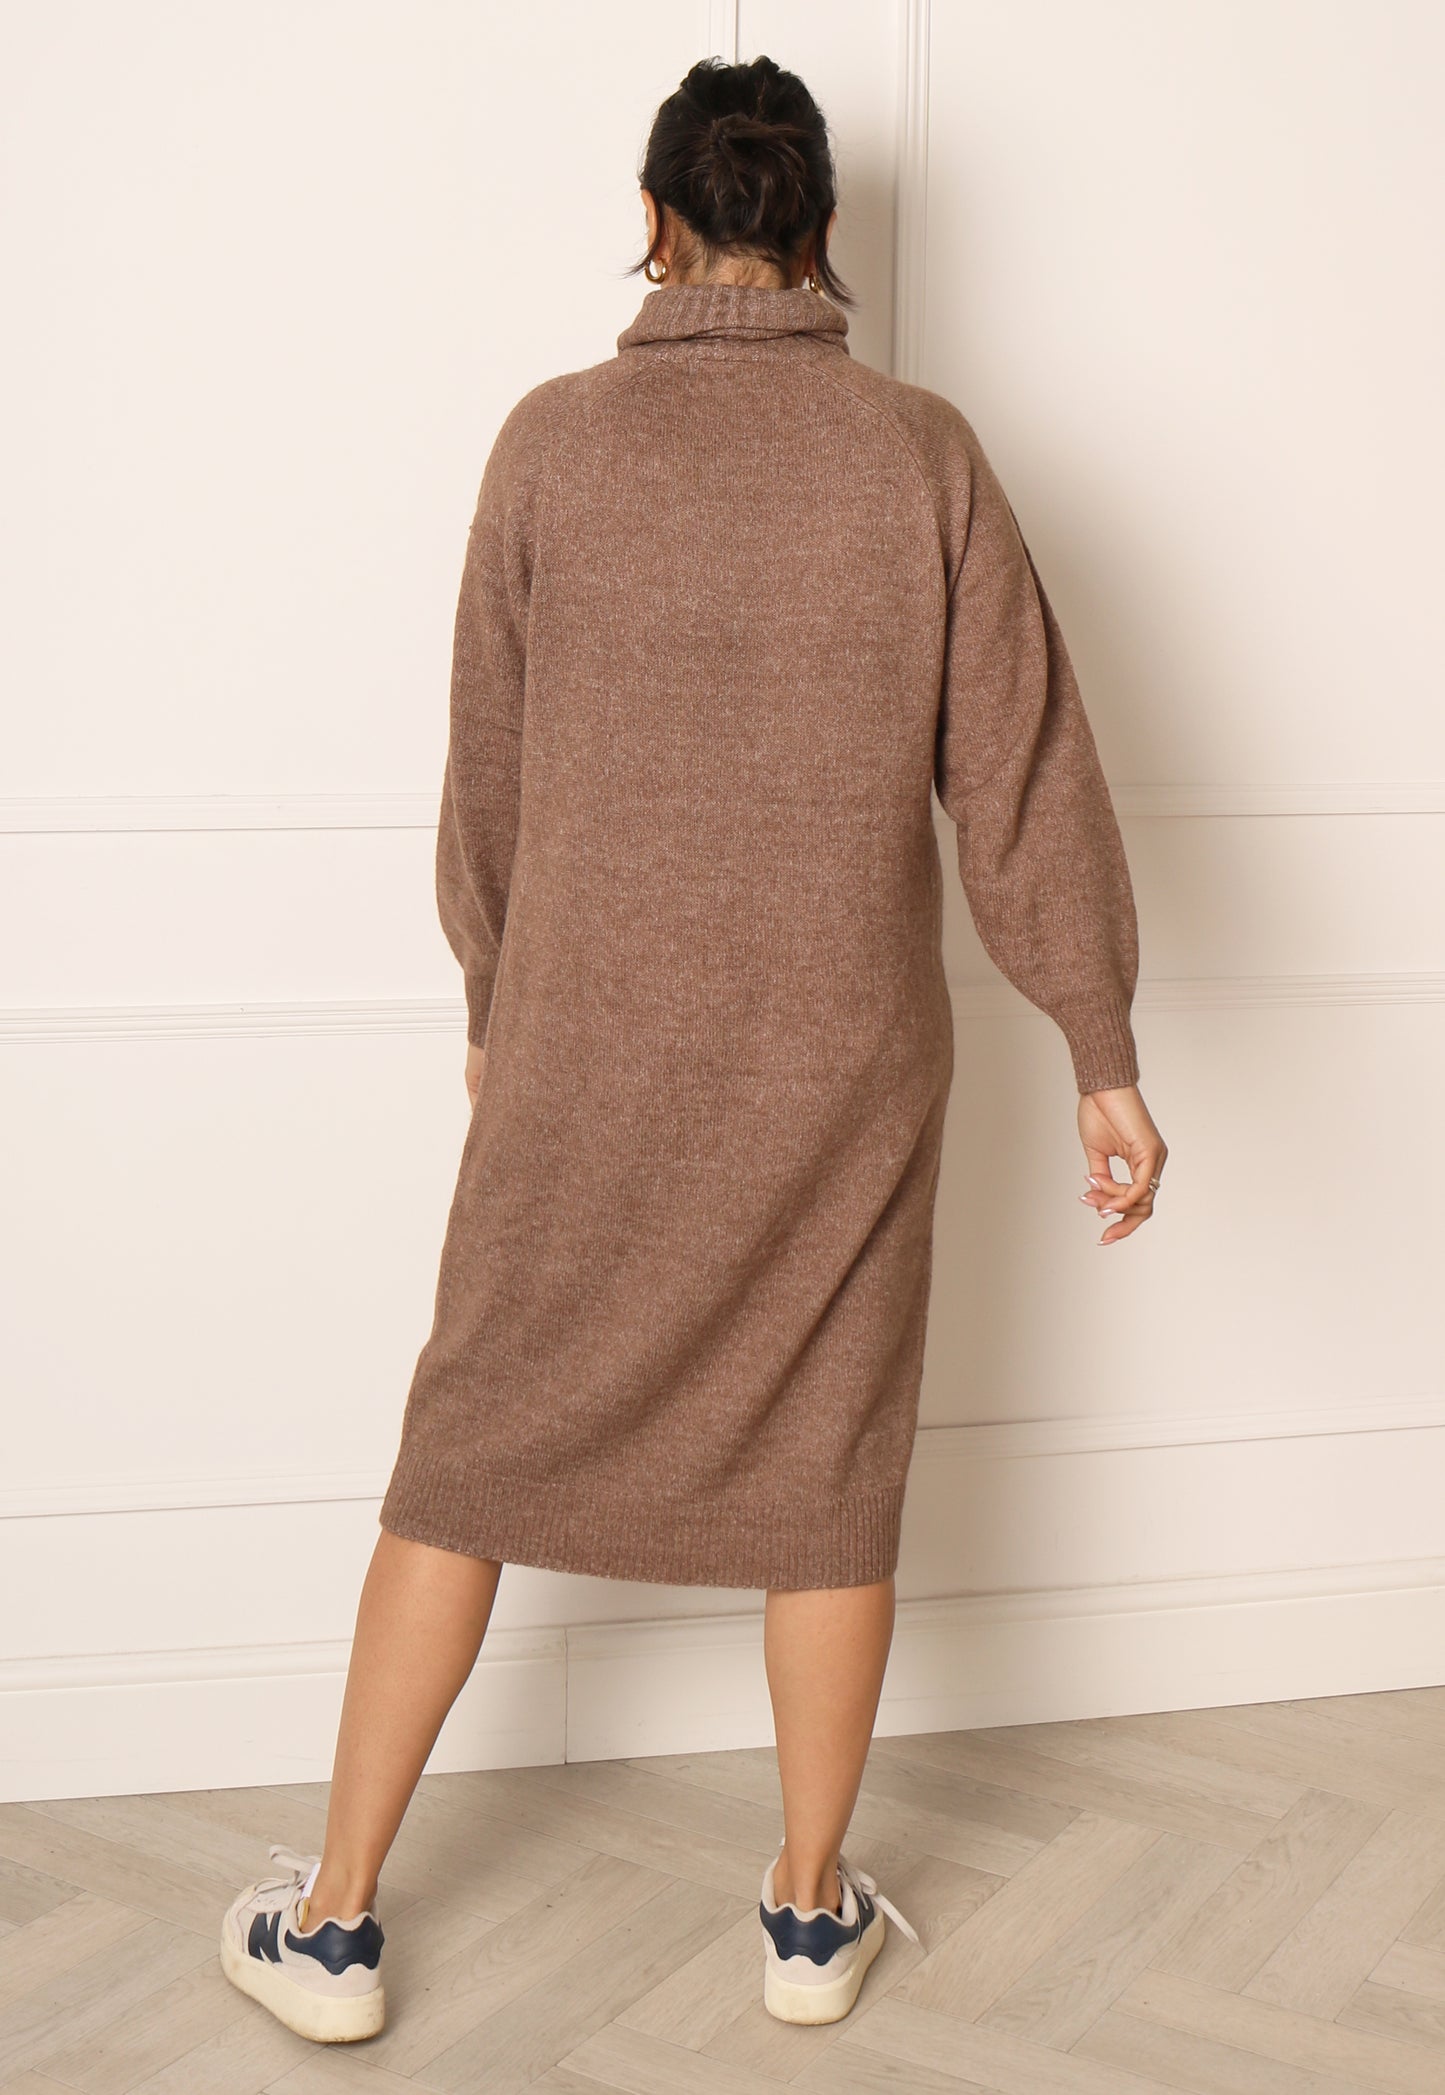 VERO MODA Daniela Long Sleeve Cowl Neck Knitted Midi Jumper Dress in Mocha Brown - One Nation Clothing